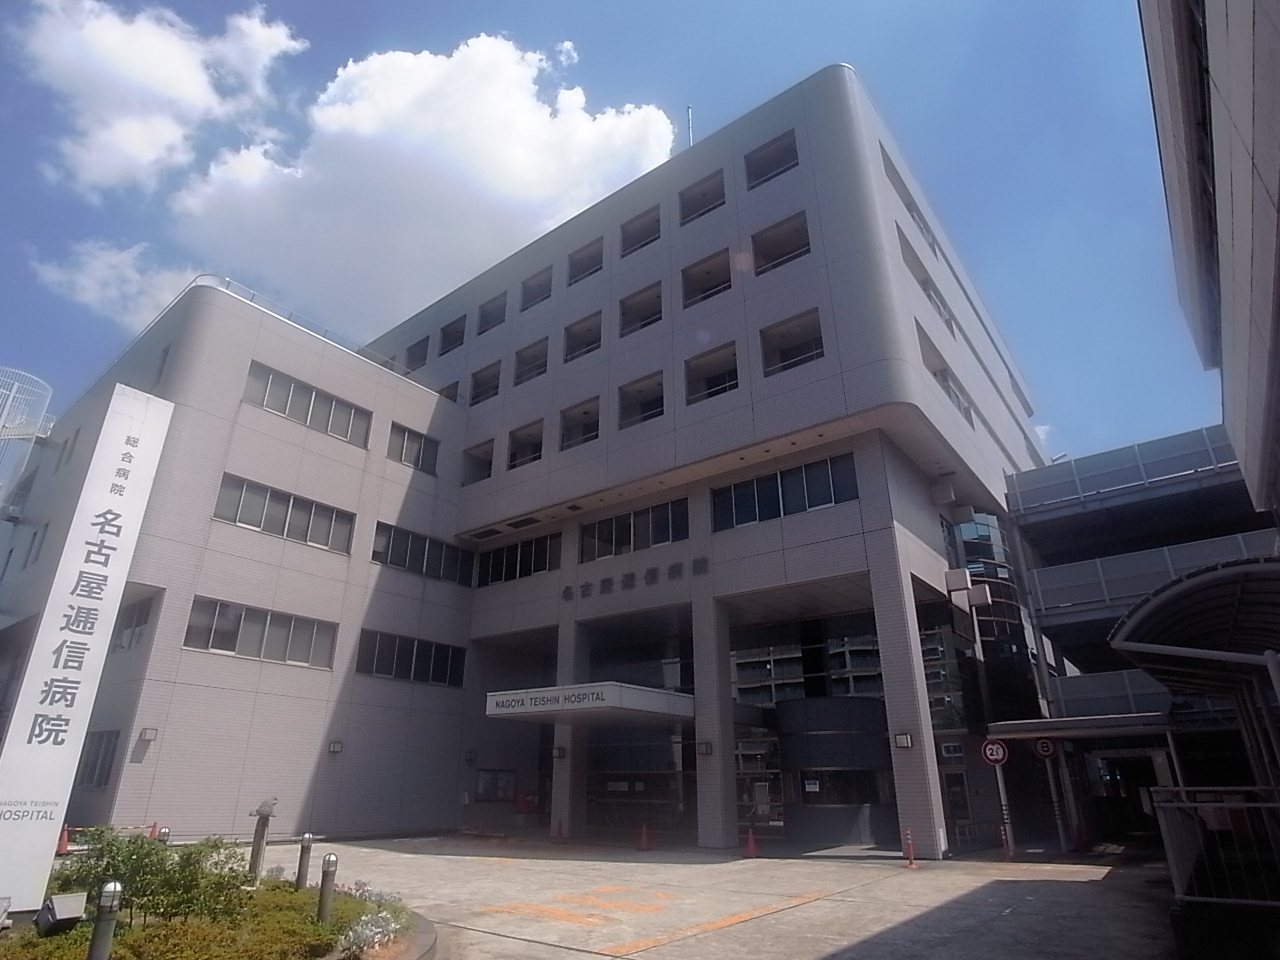 Hospital. 618m to Nagoya the Communications Hospital (General Hospital) (hospital)